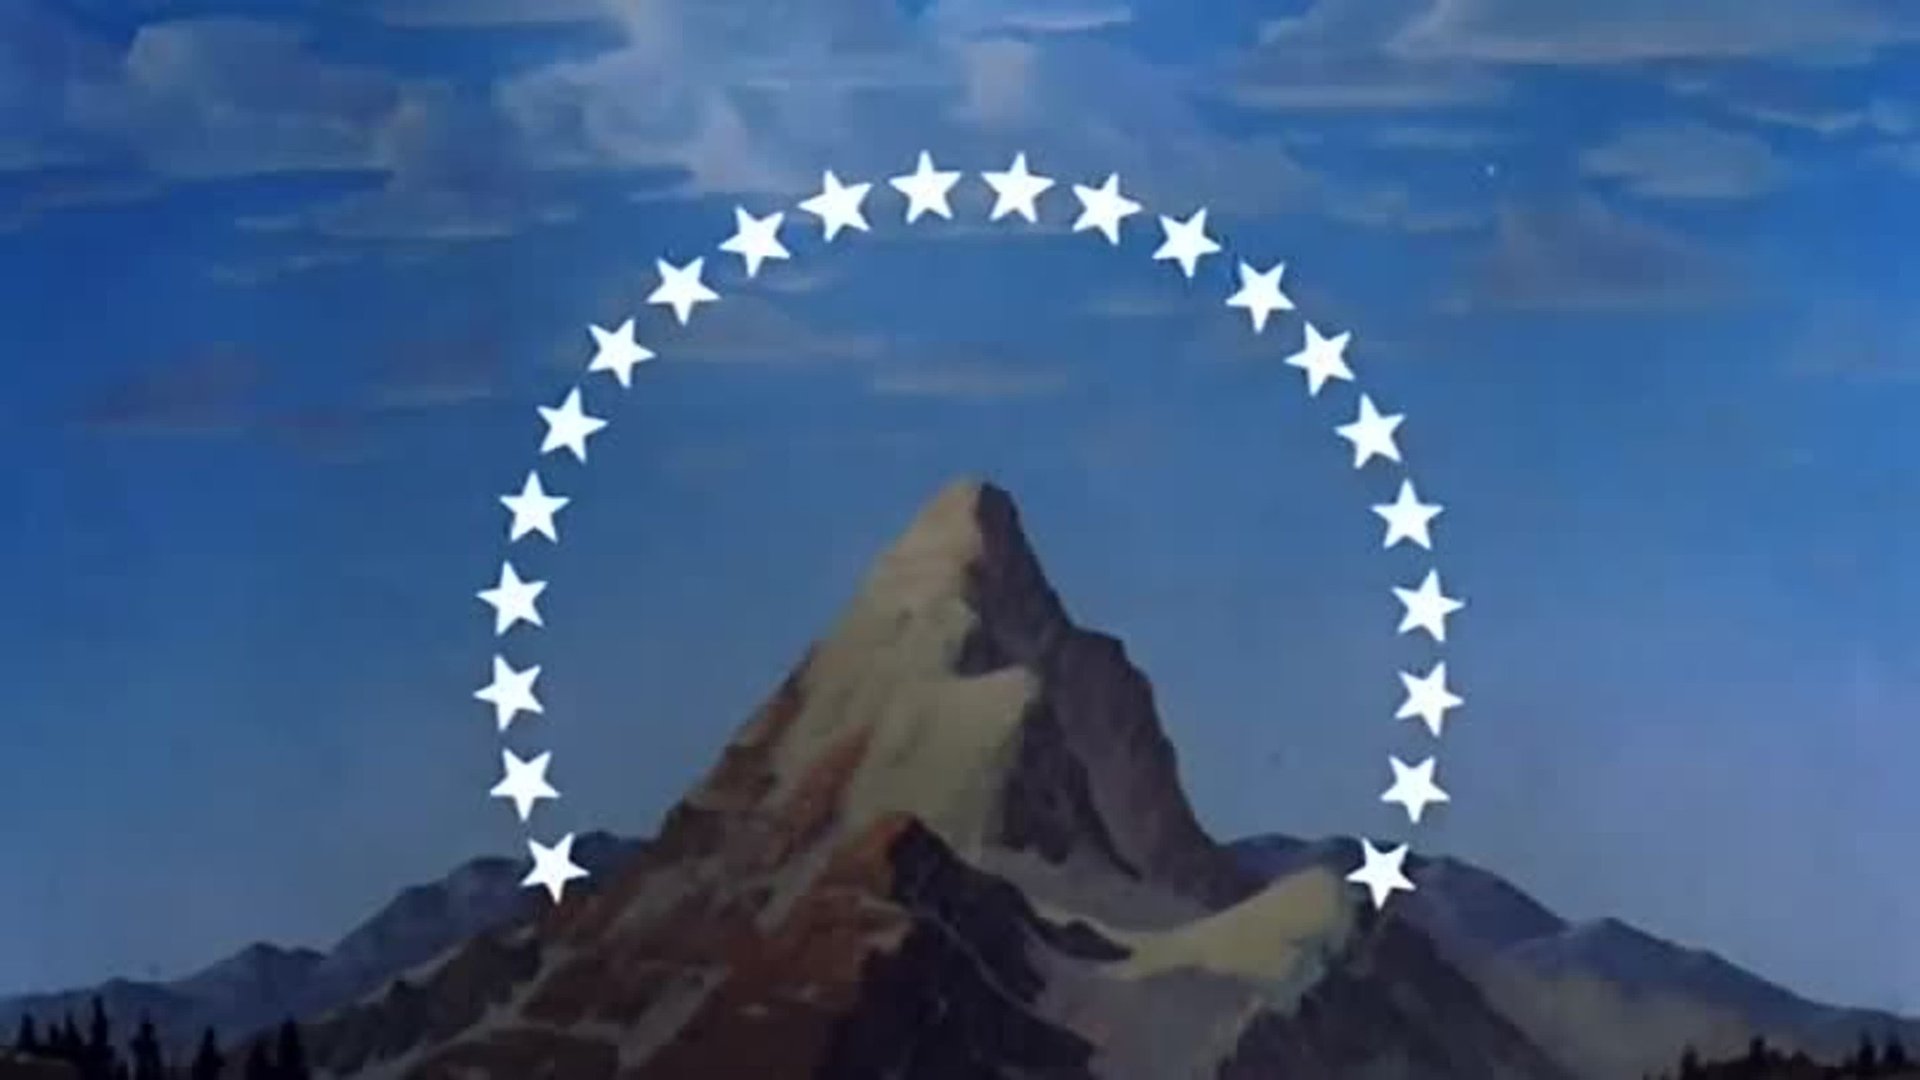 Парамаунт заставка. Парамаунт Пикчерз 1982. Студия Парамаунт Пикчерз. Парамаунт Пикчерз гора. Гора на логотипе Парамаунт Пикчерз.